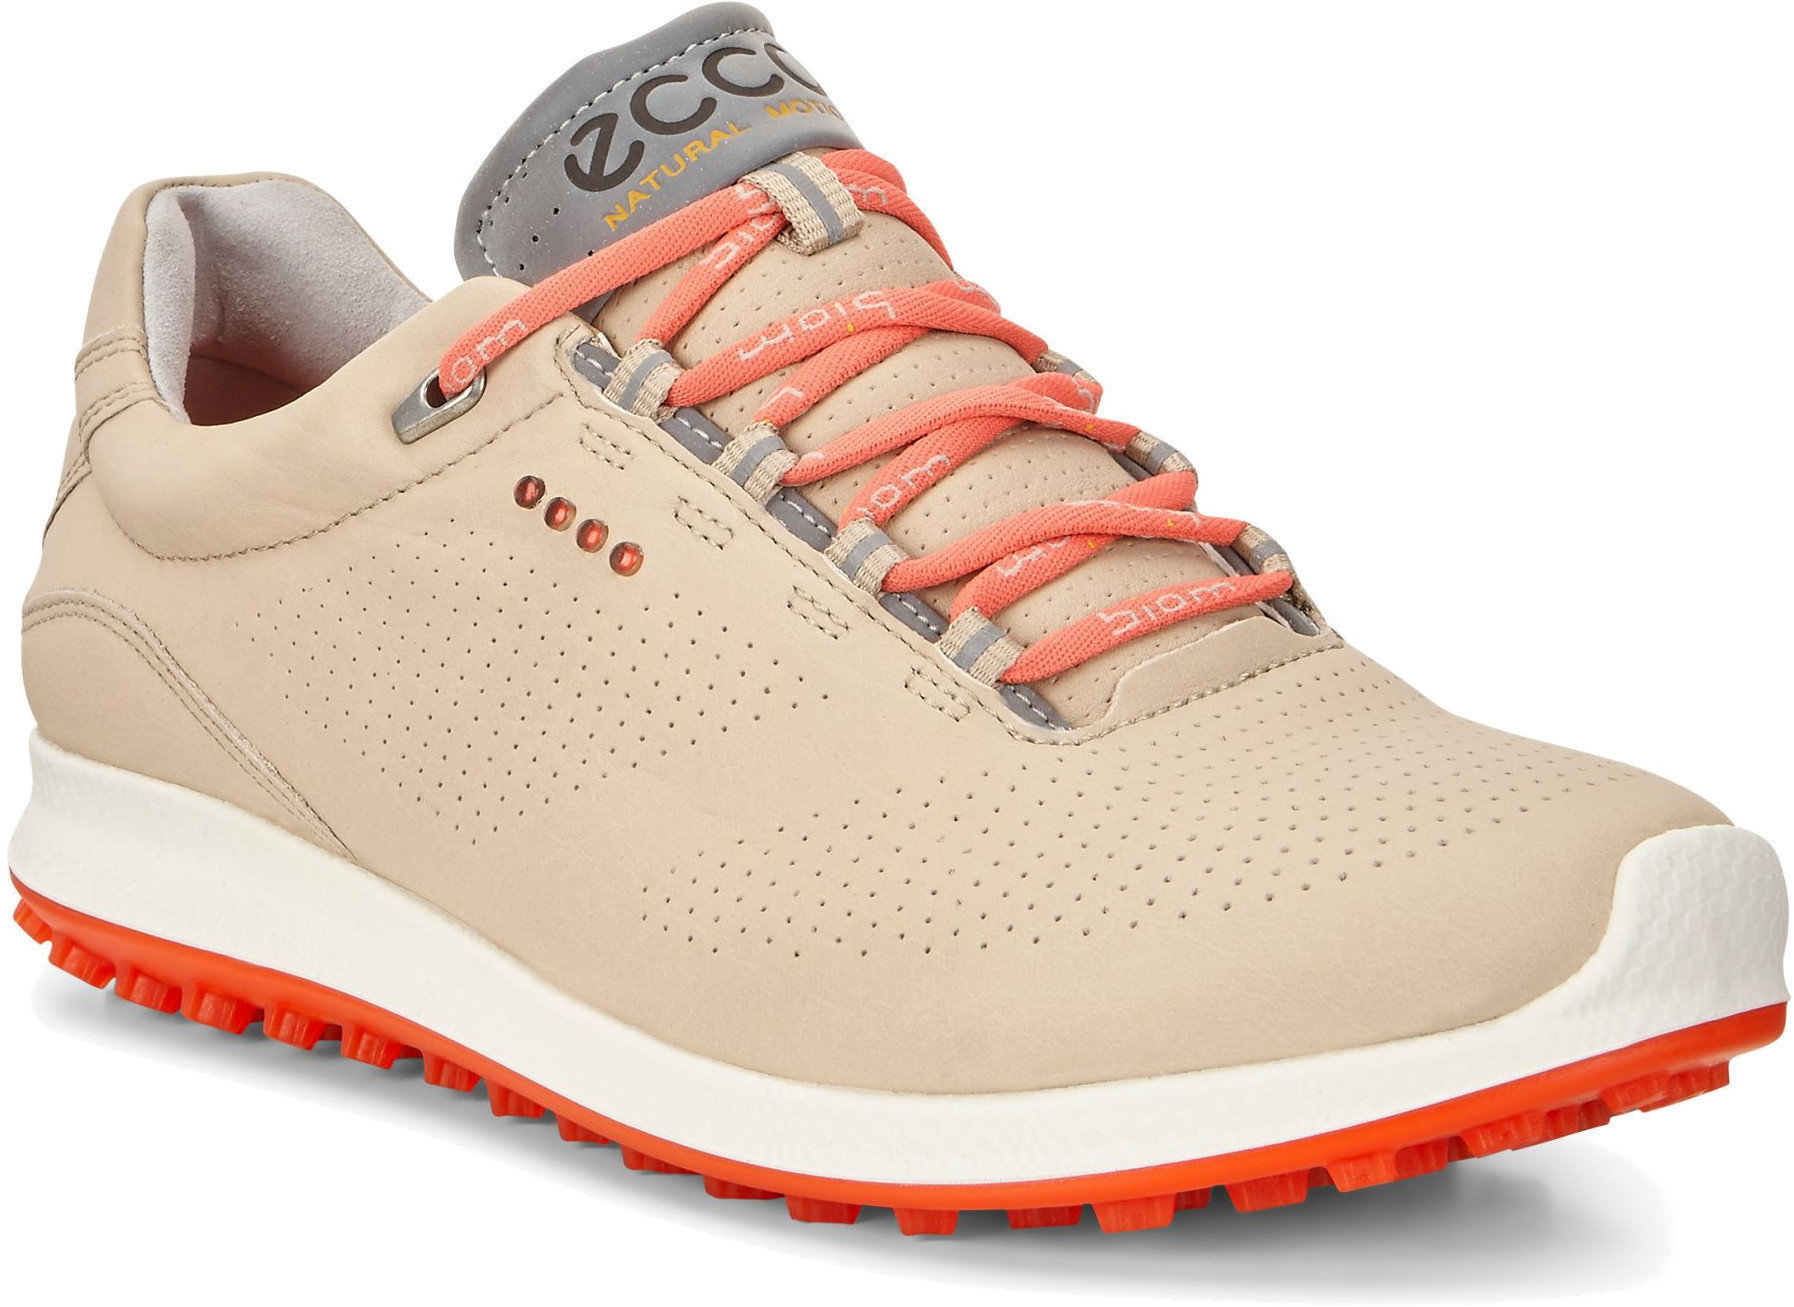 Chaussures de golf pour femmes Ecco Biom Hybrid 2 Chaussures de Golf Femmes Oyester/Coral Blush US 9